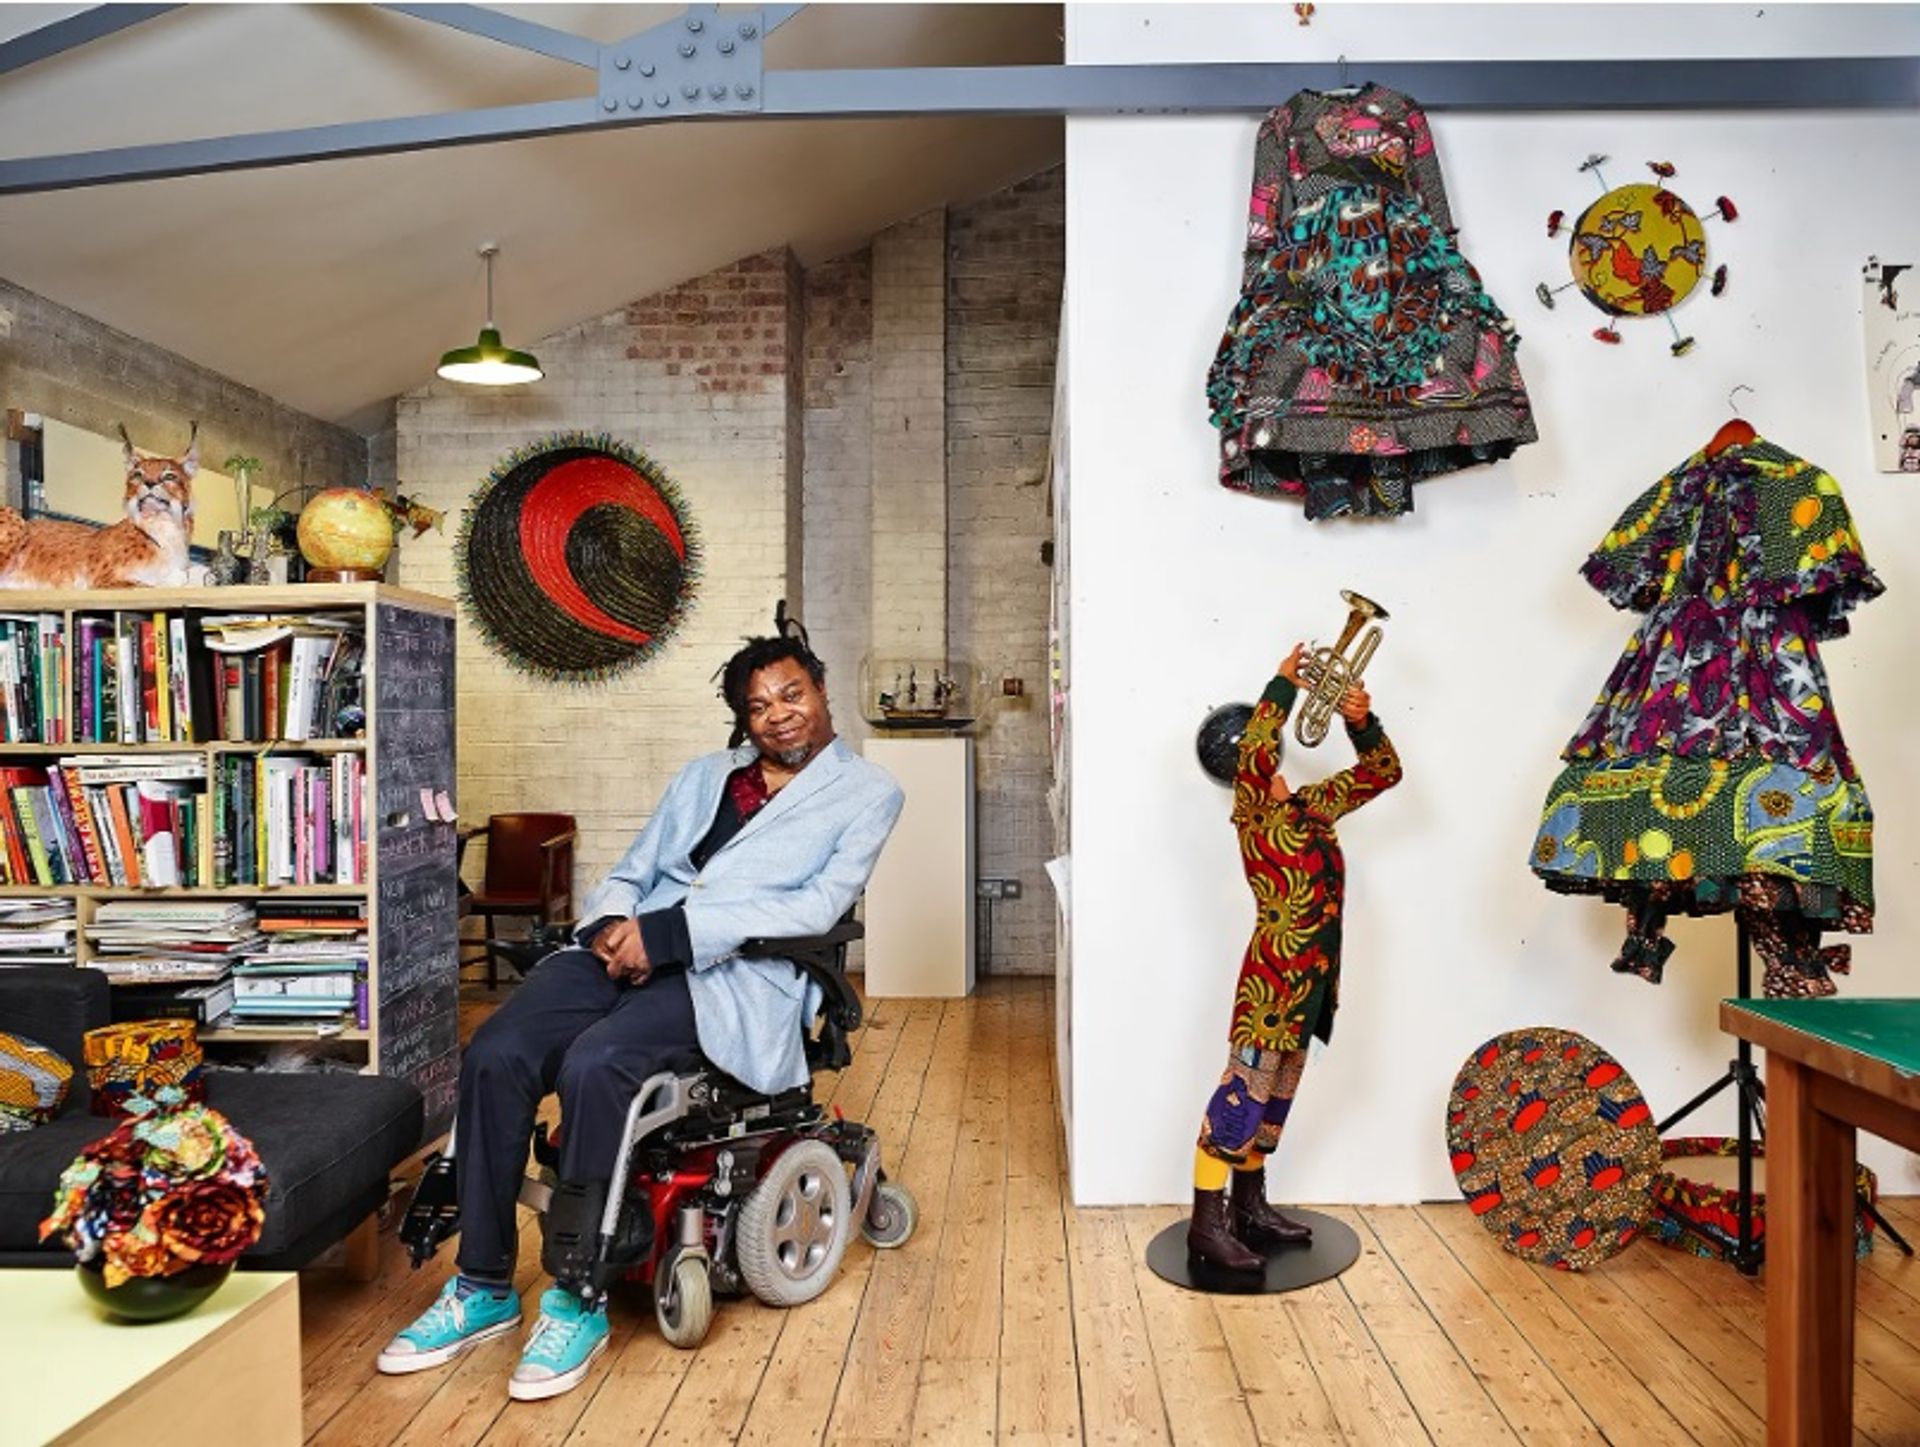 Yinka Shonibare CBE בסטודיו שלו

צילום: ג'יימס מולינסון, באדיבות האמן